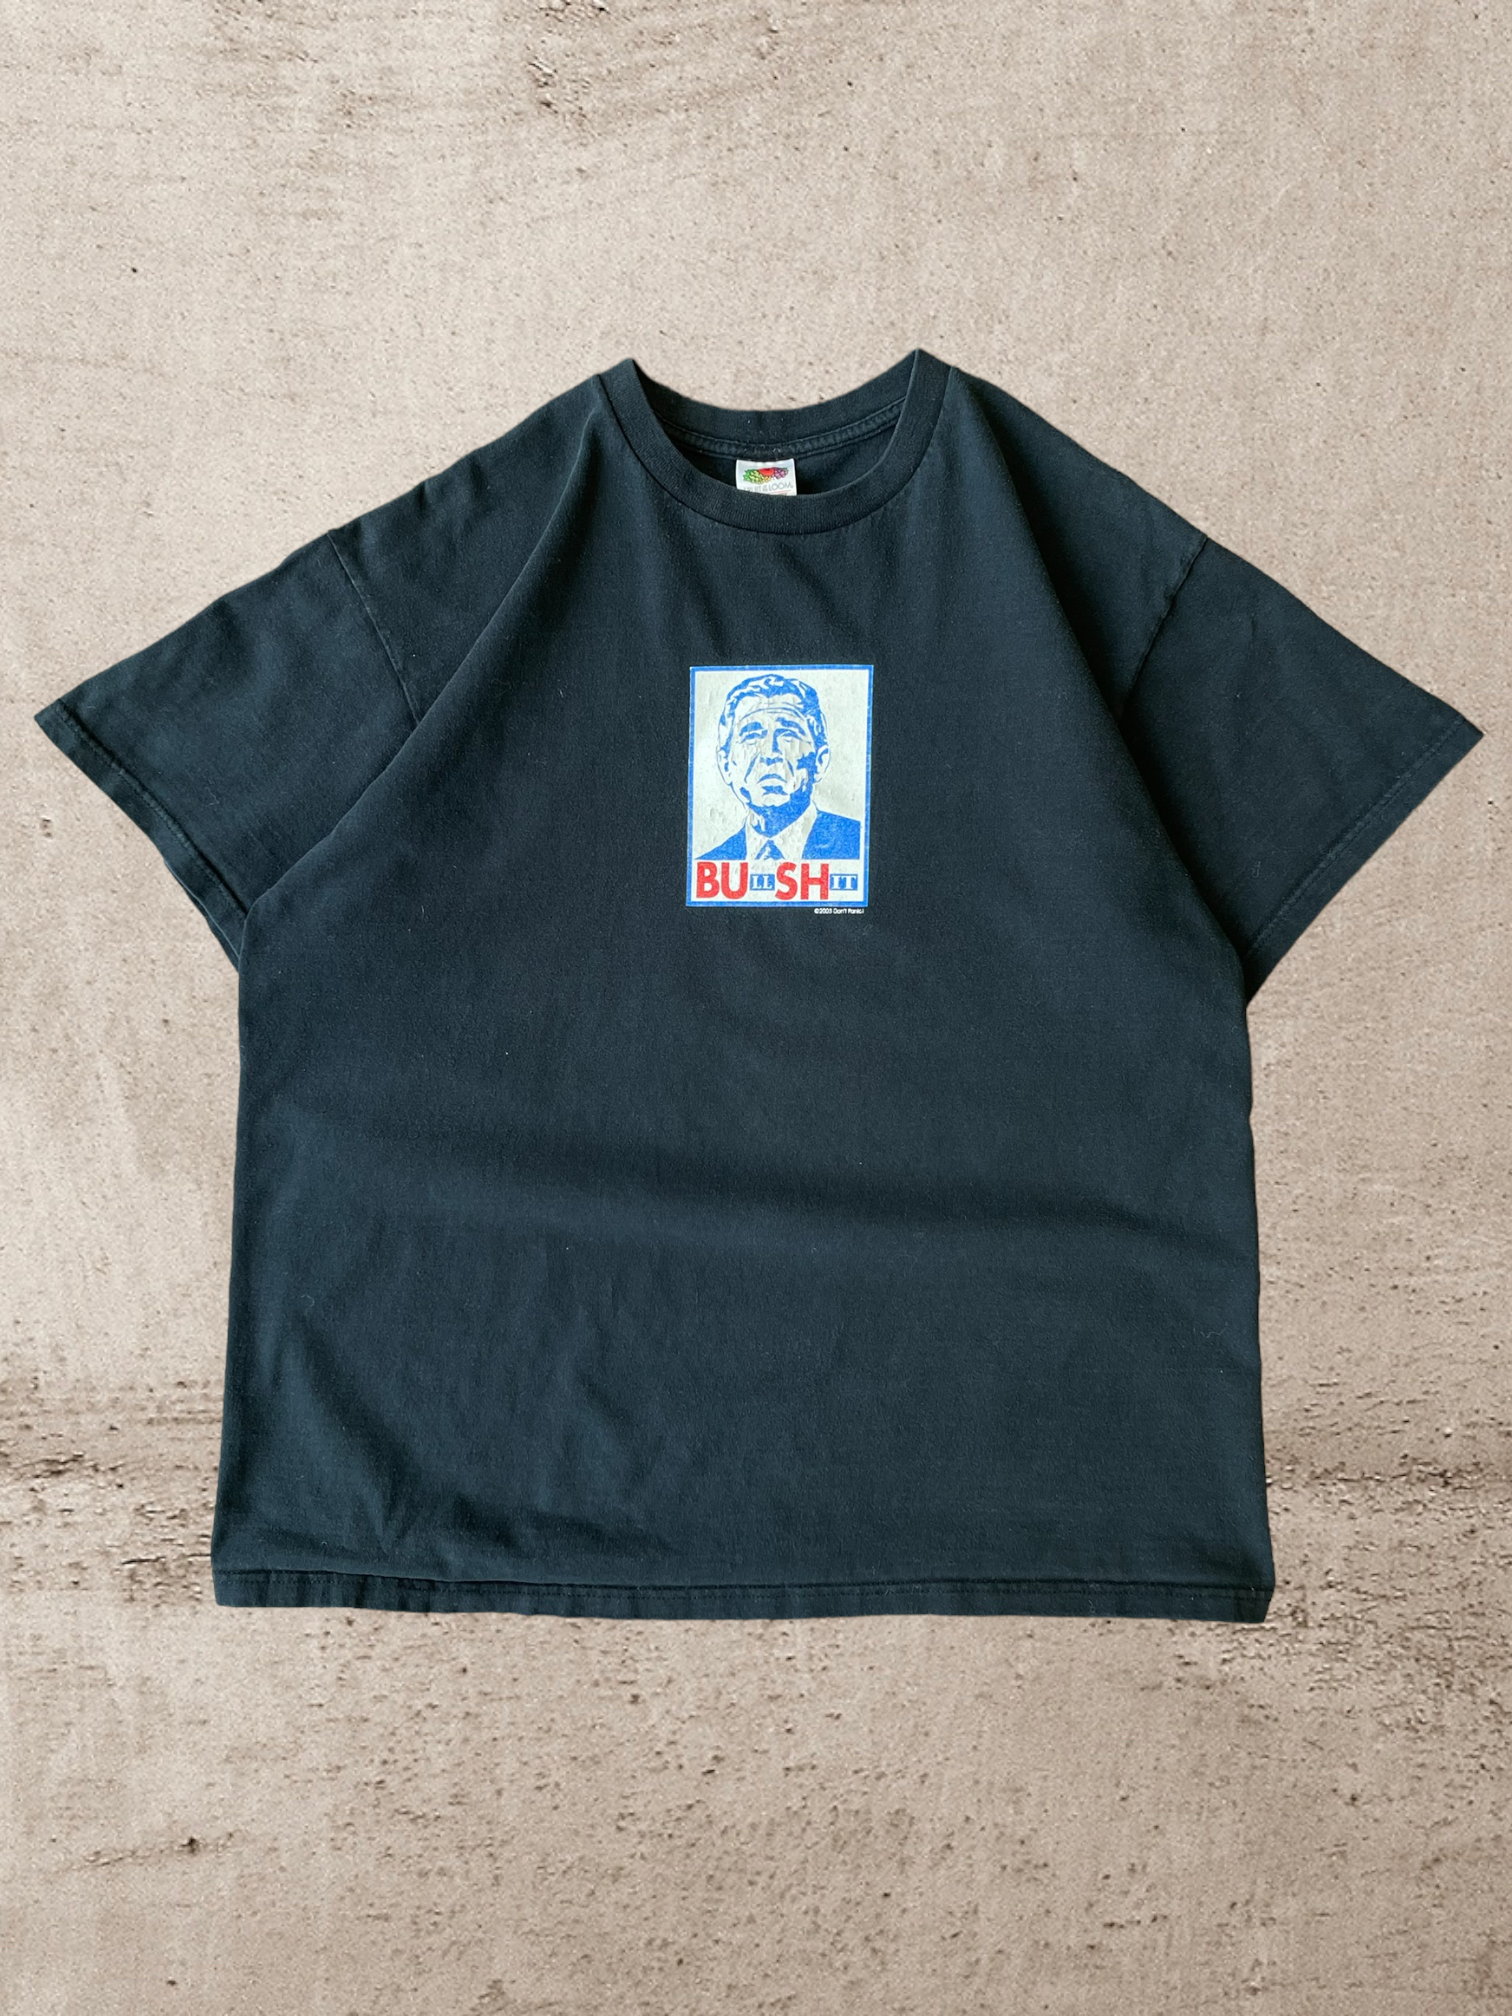 2003 George Bush Bull Sh*t T-Shirt - X-Large